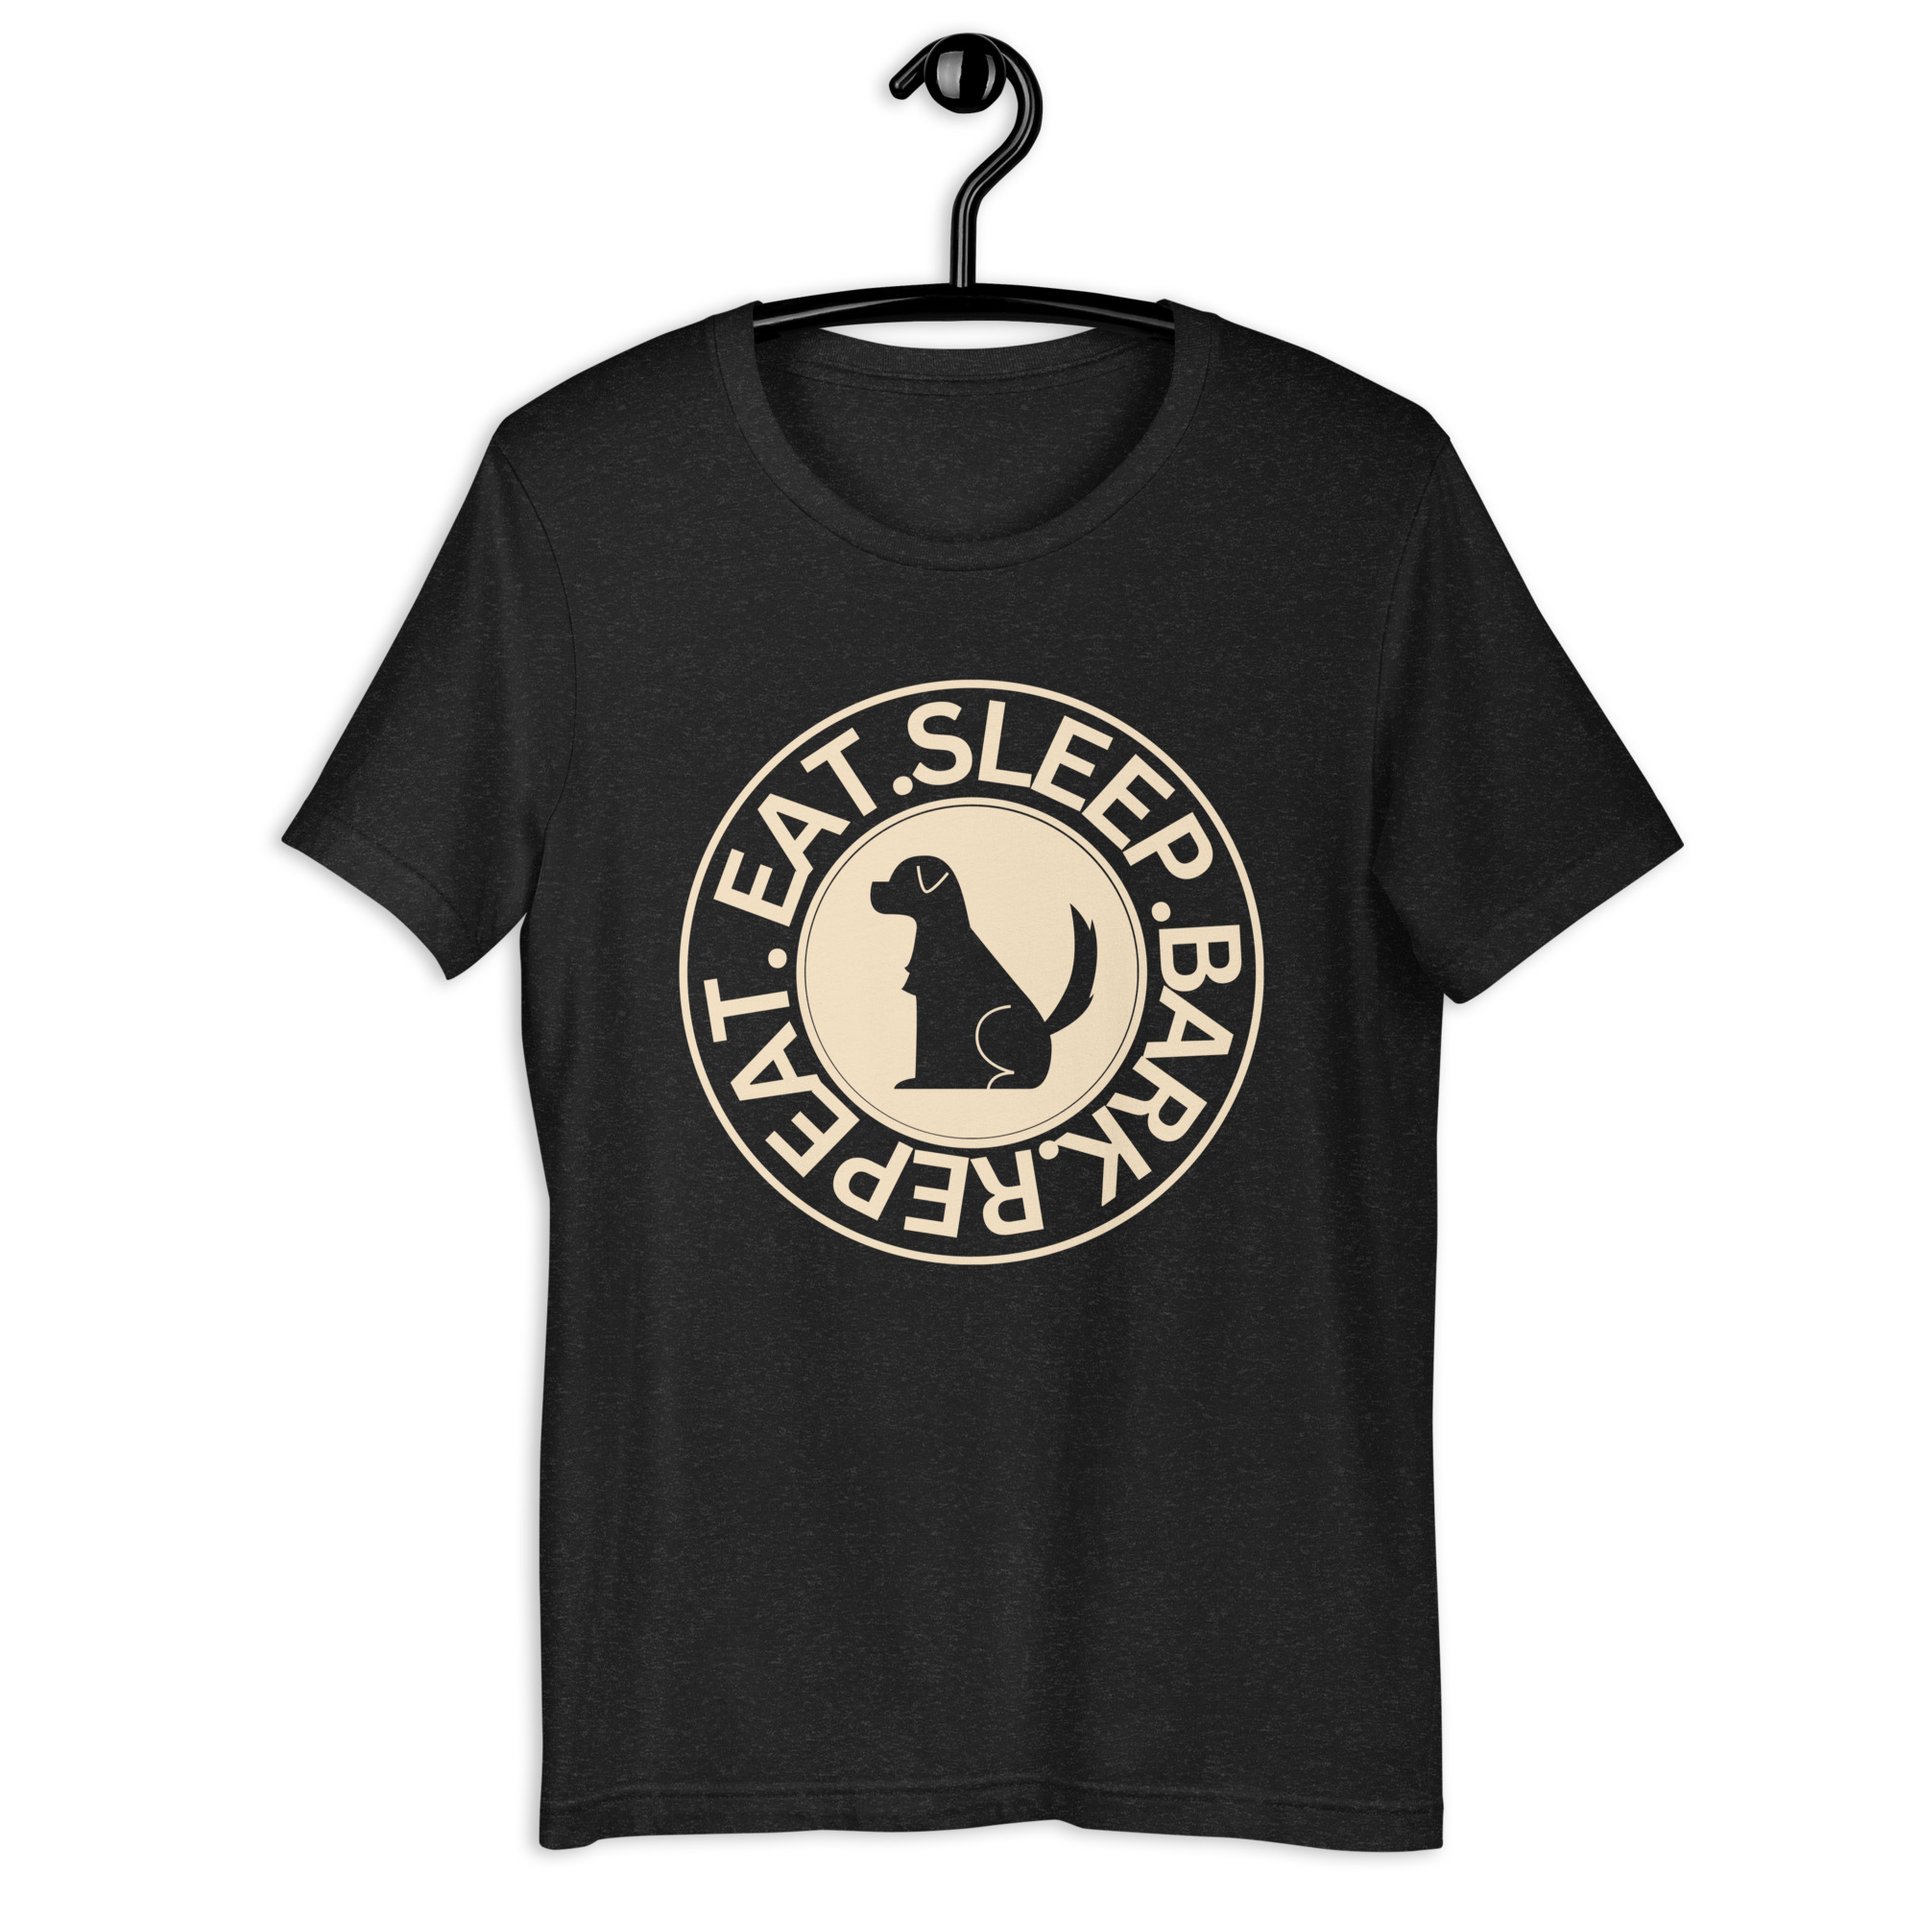 Eat Sleep Bark Repeat Ansylvanian Hound Unisex T-Shirt. Black Heather